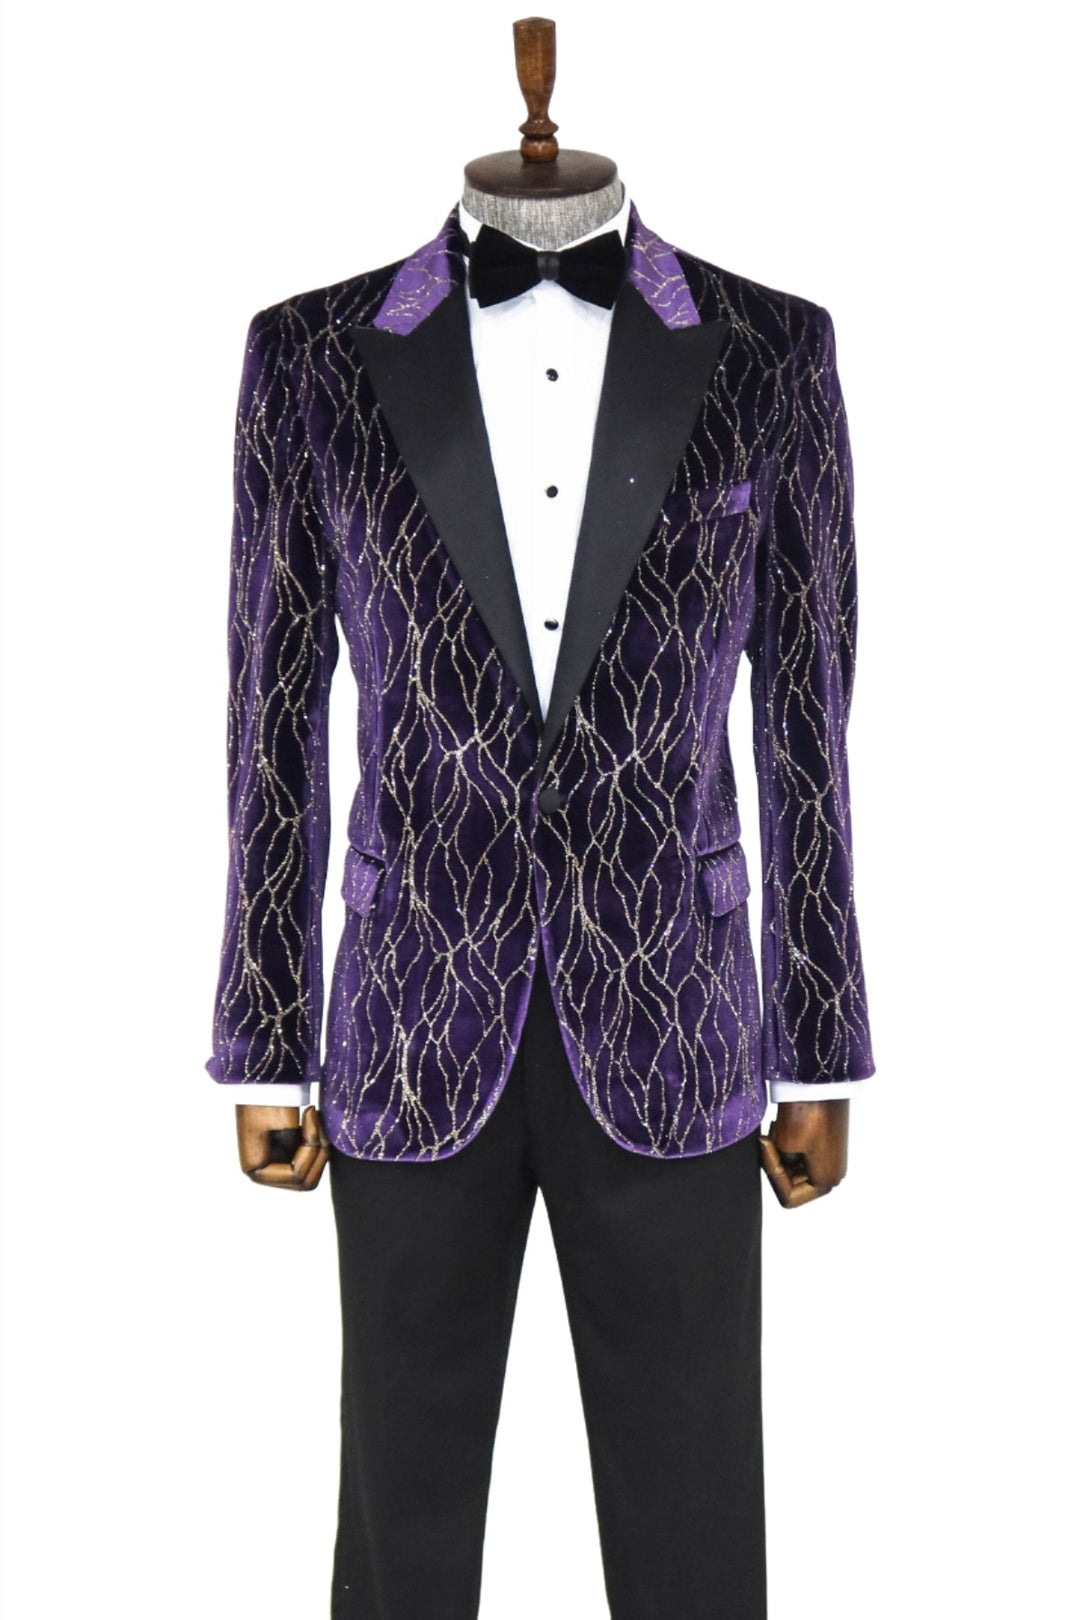 Gold Patterned Purple Men Prom Blazer - Wessi